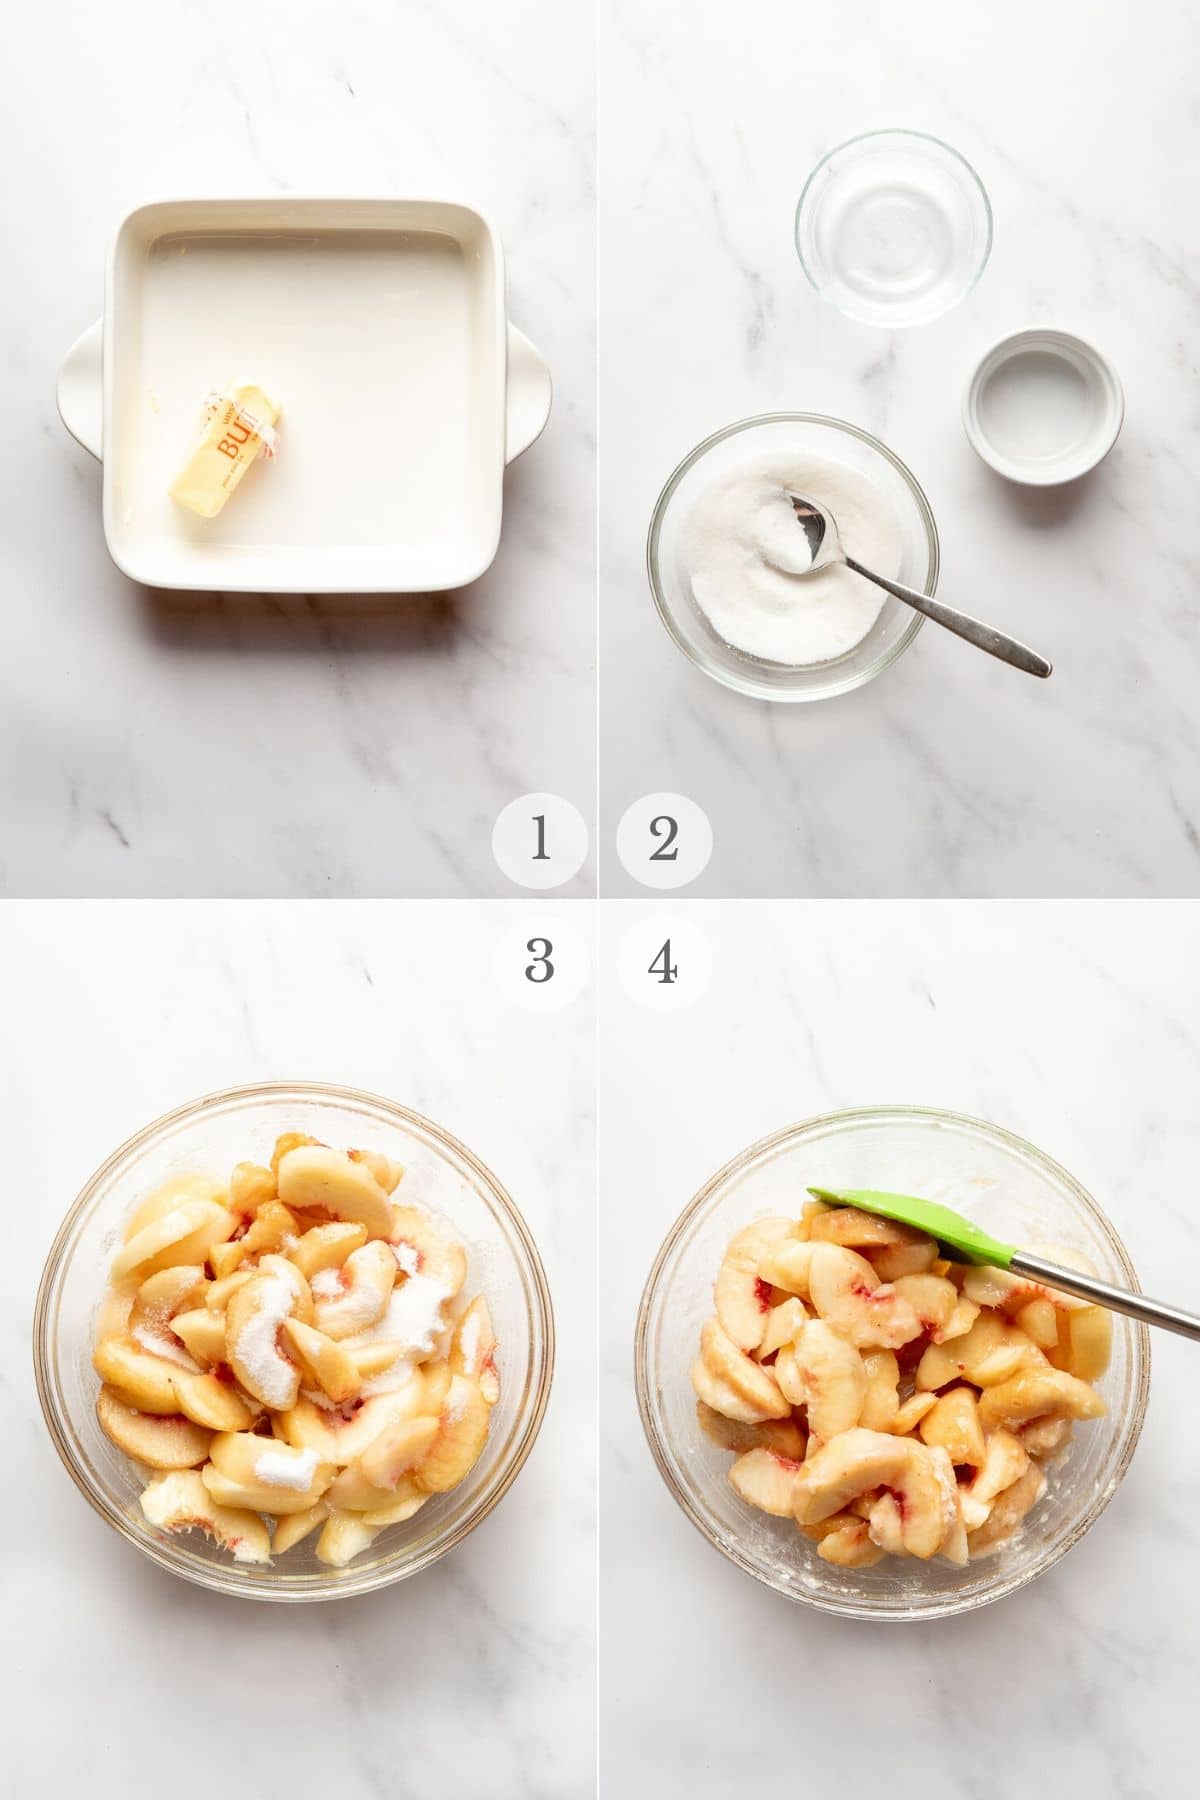 peach crumble recipe steps collage: preparing the peach filling